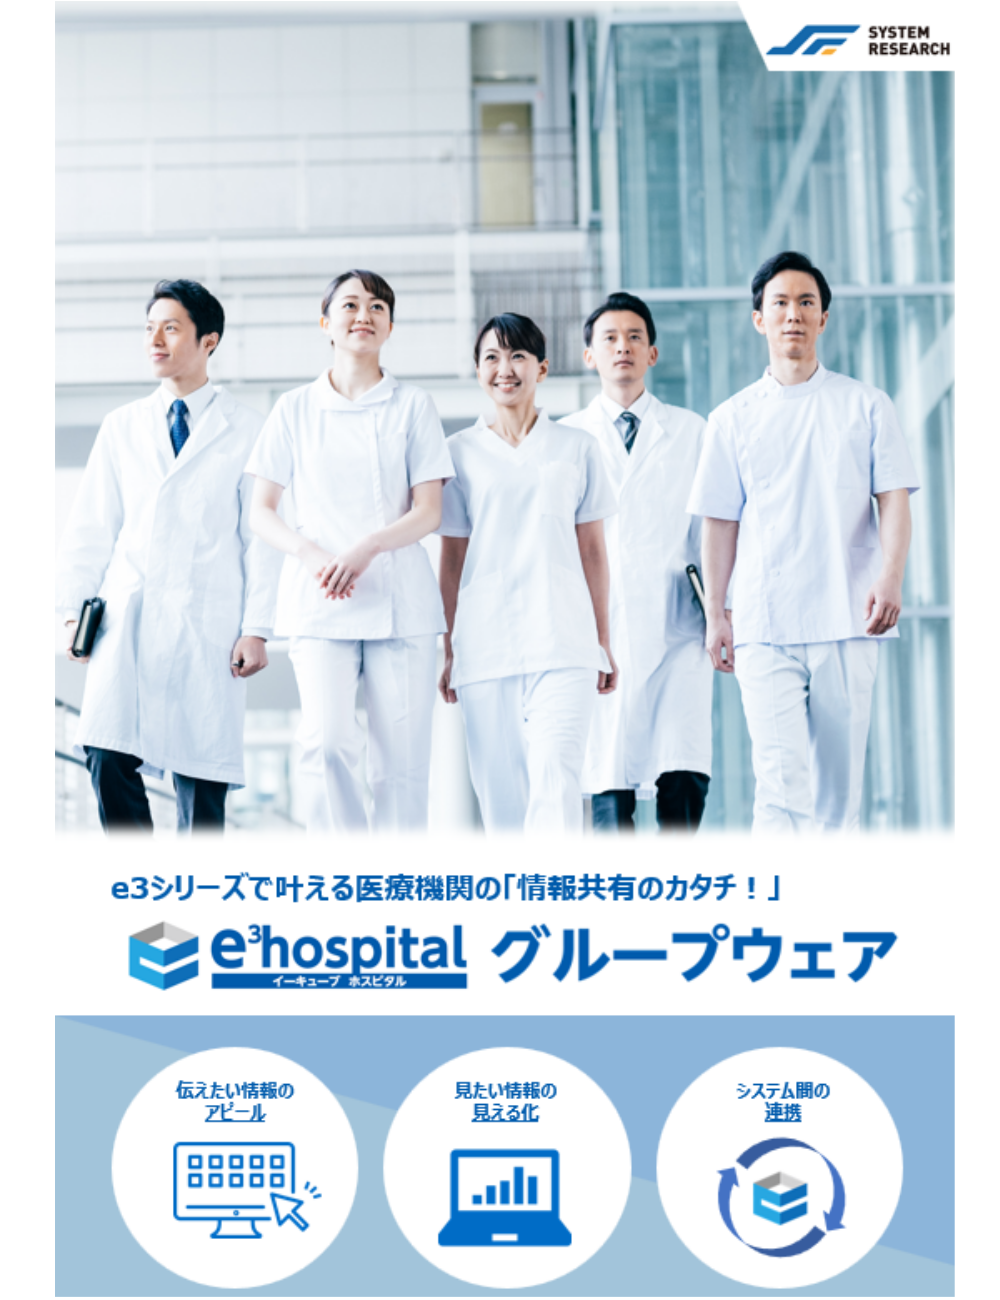 download_e3hospital.png